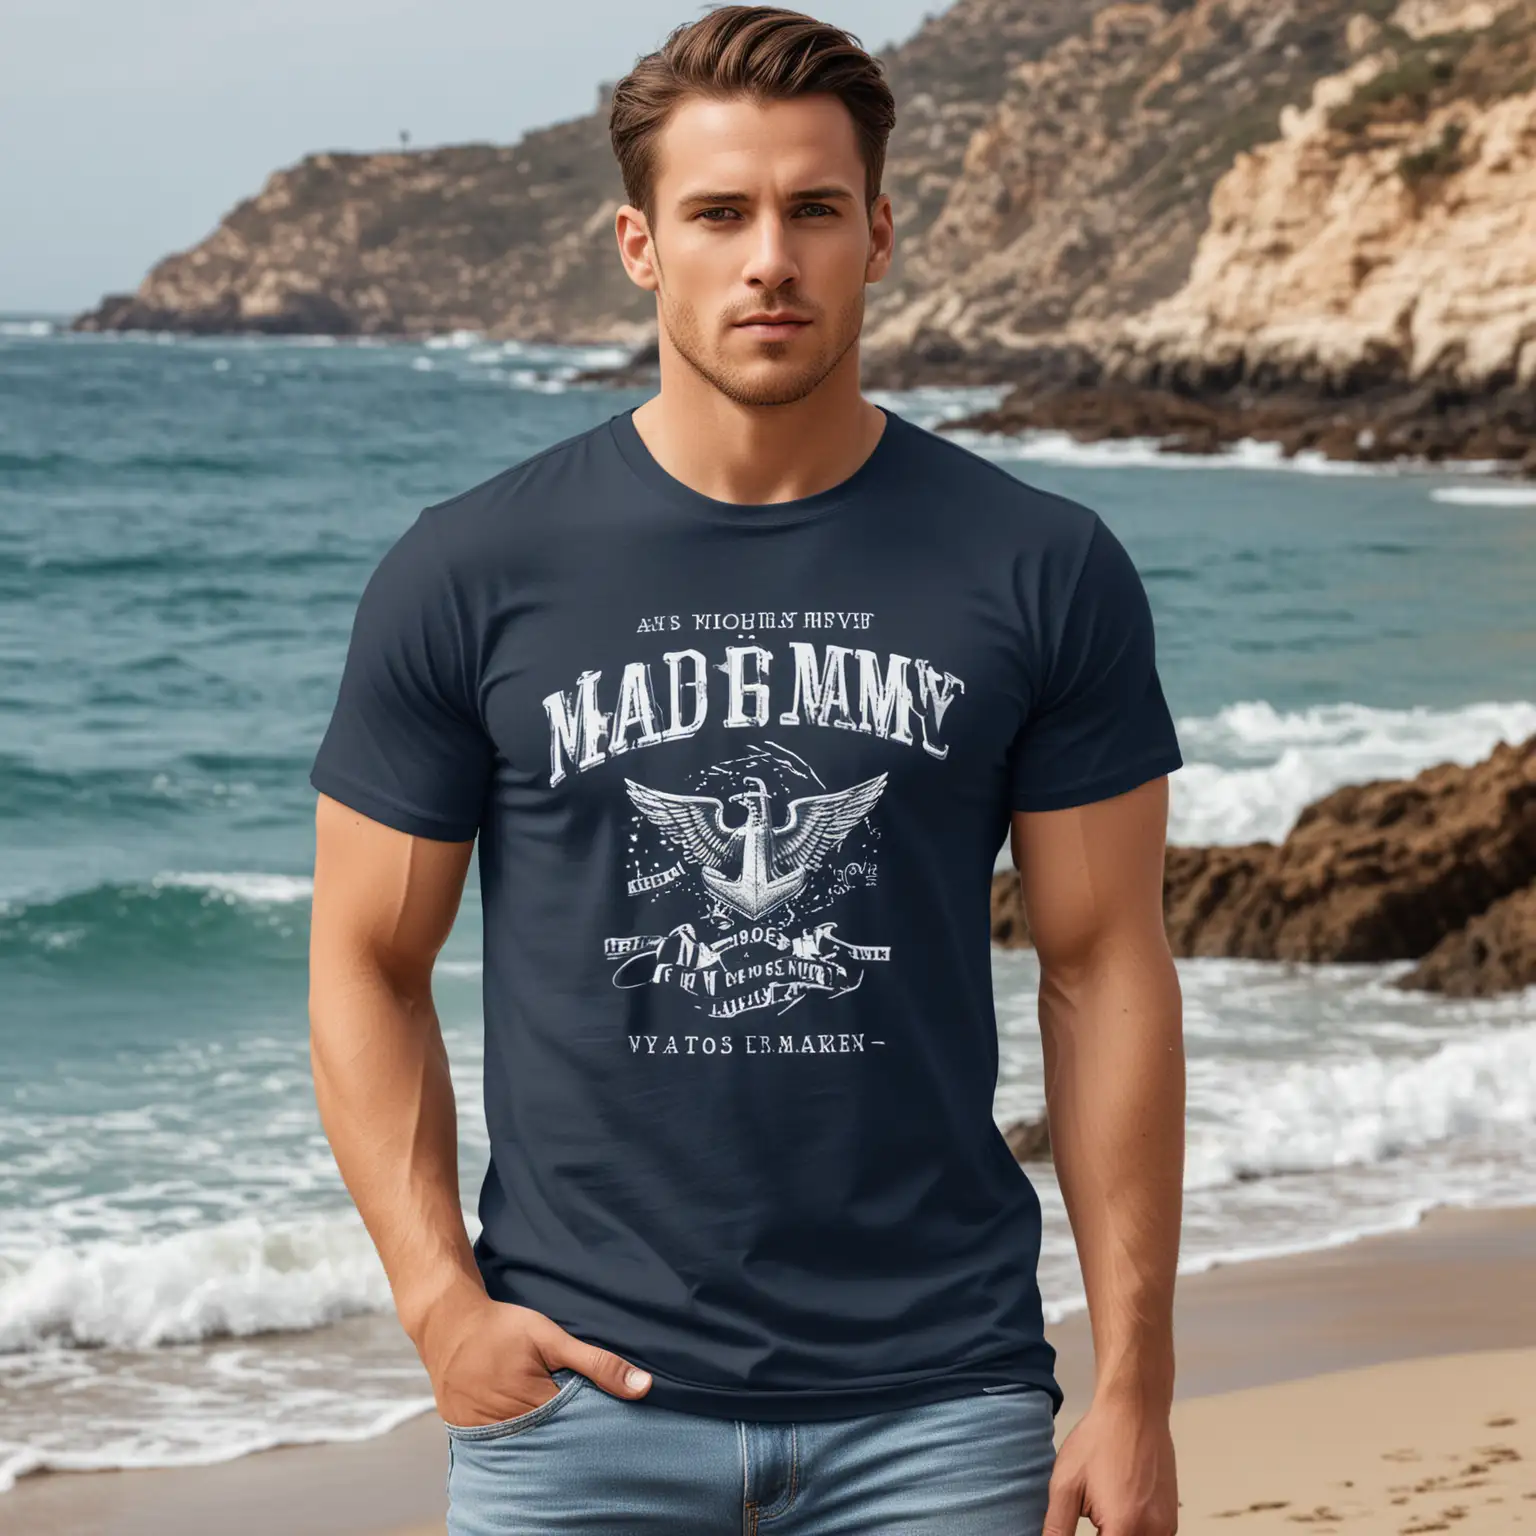 Male Model Wearing Navy Tee by the Ocean